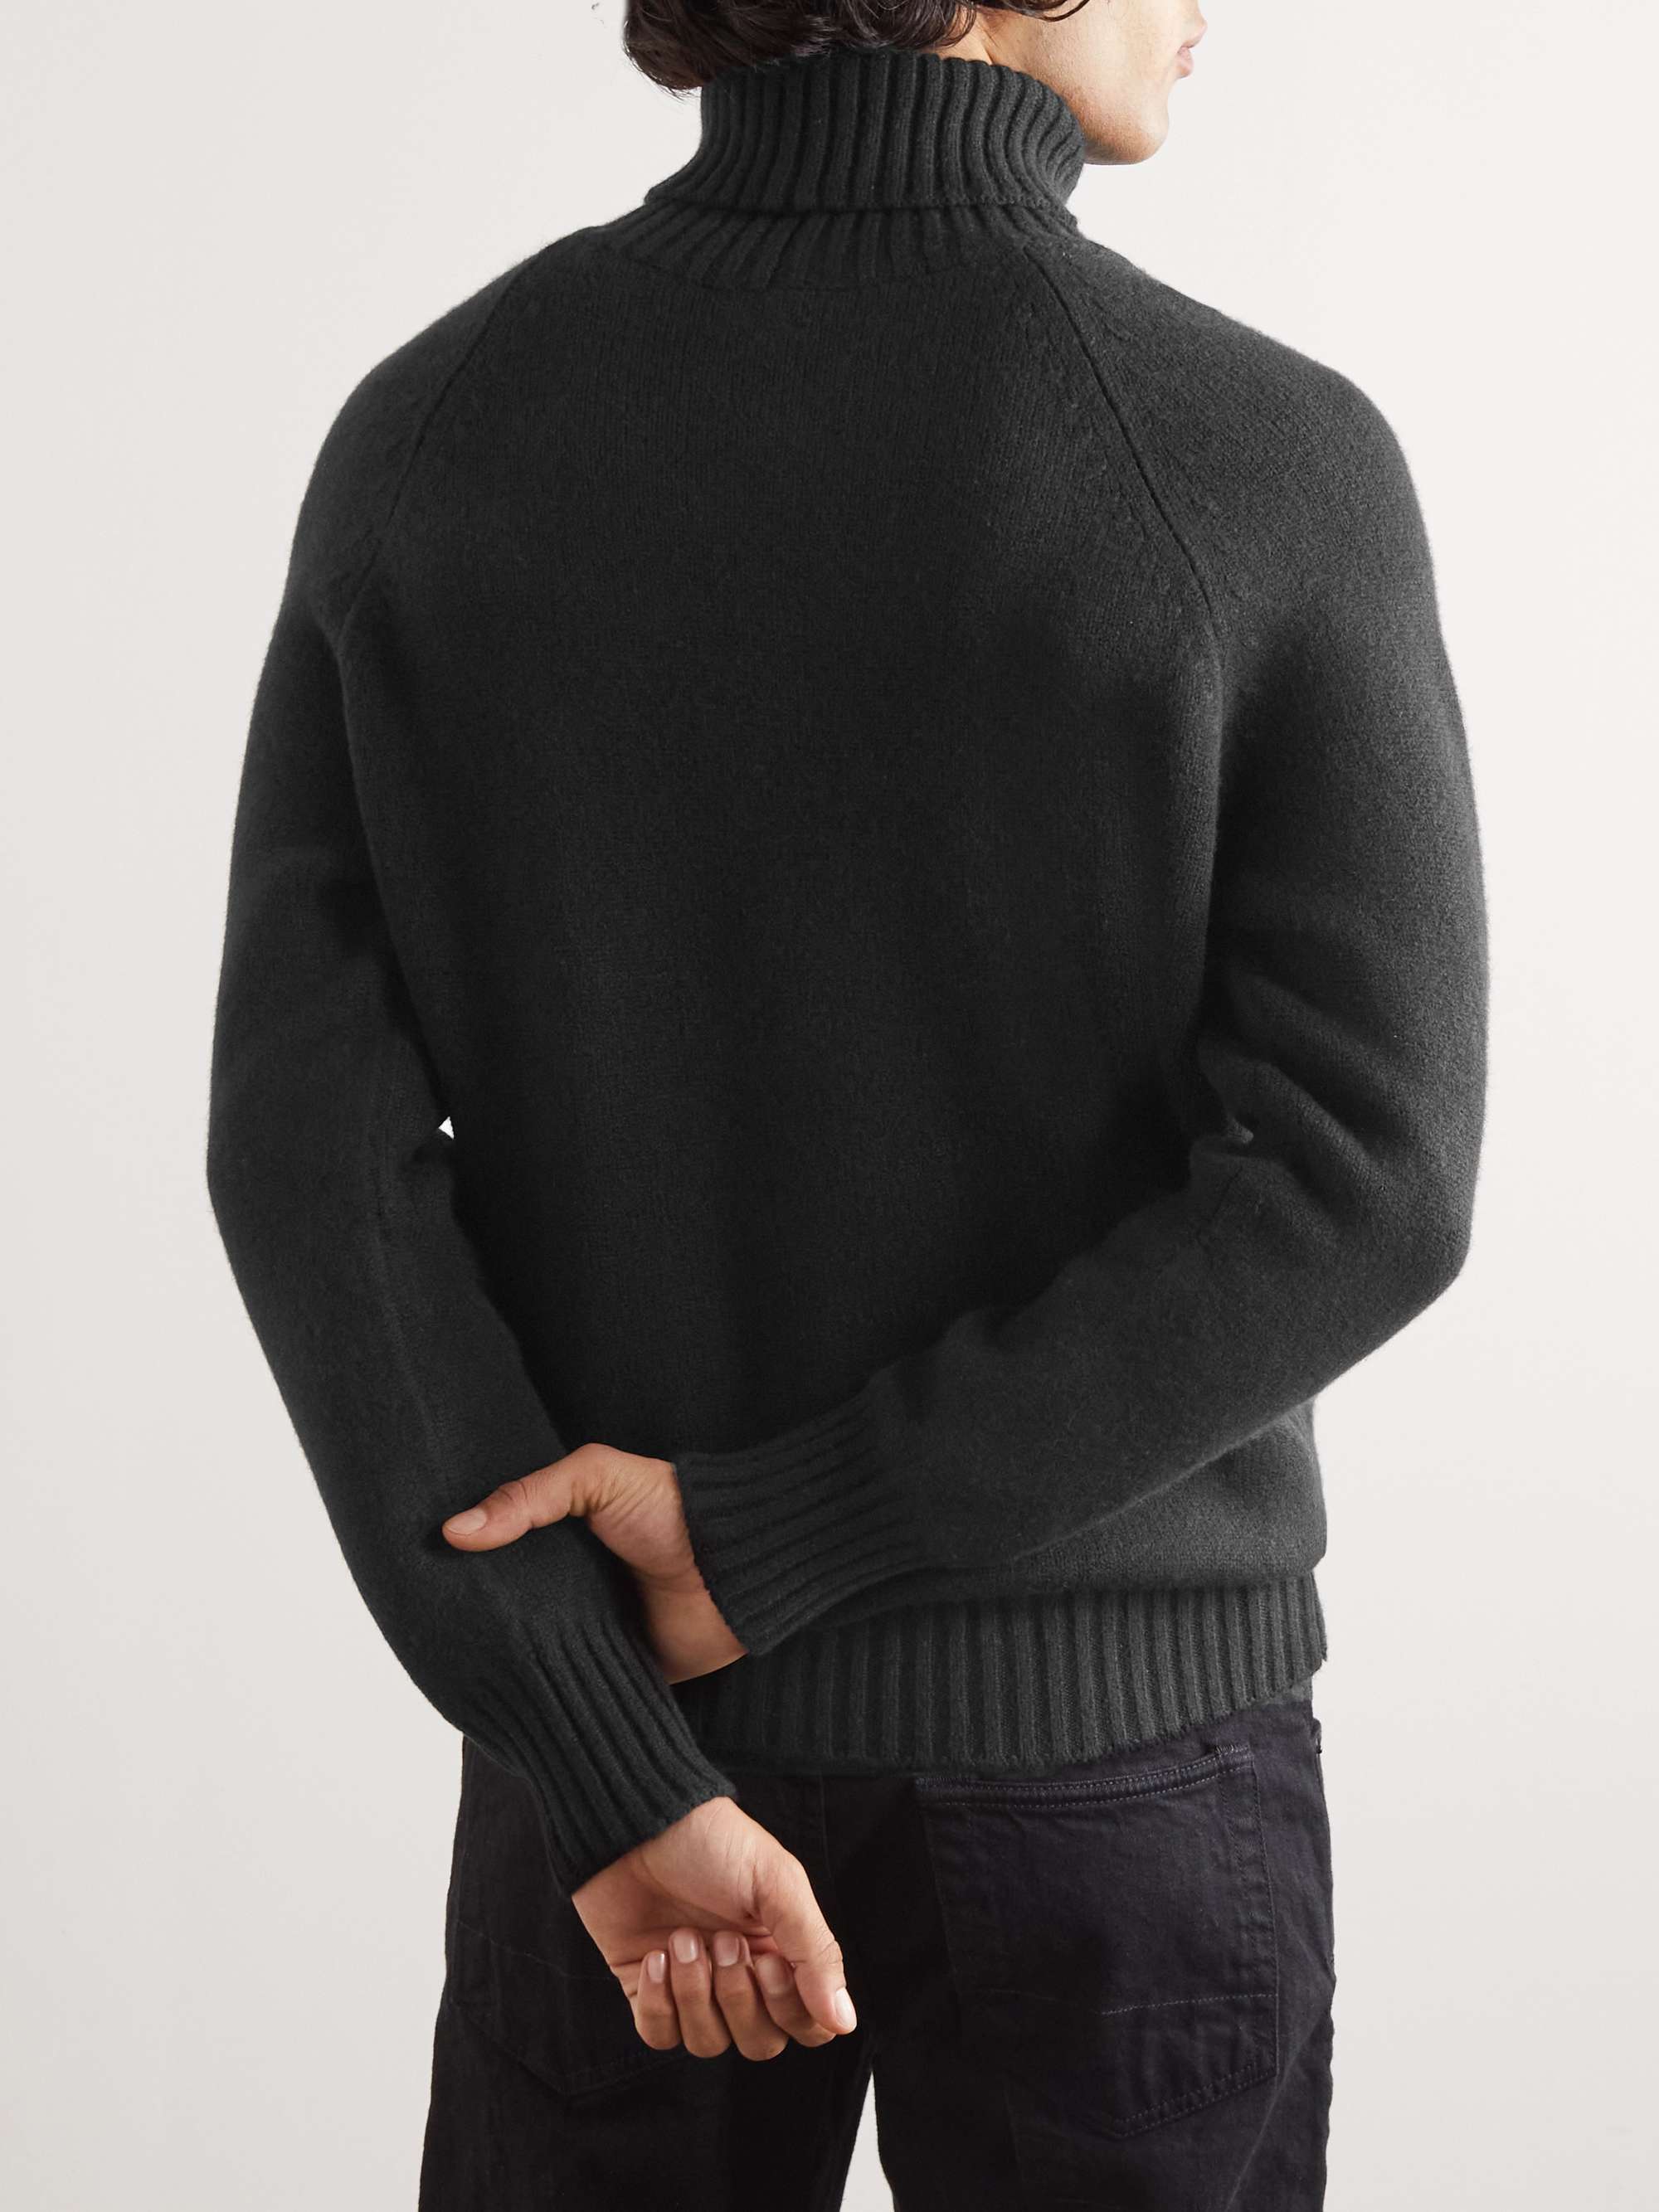 TOM FORD Cashmere-Blend Rollneck Sweater